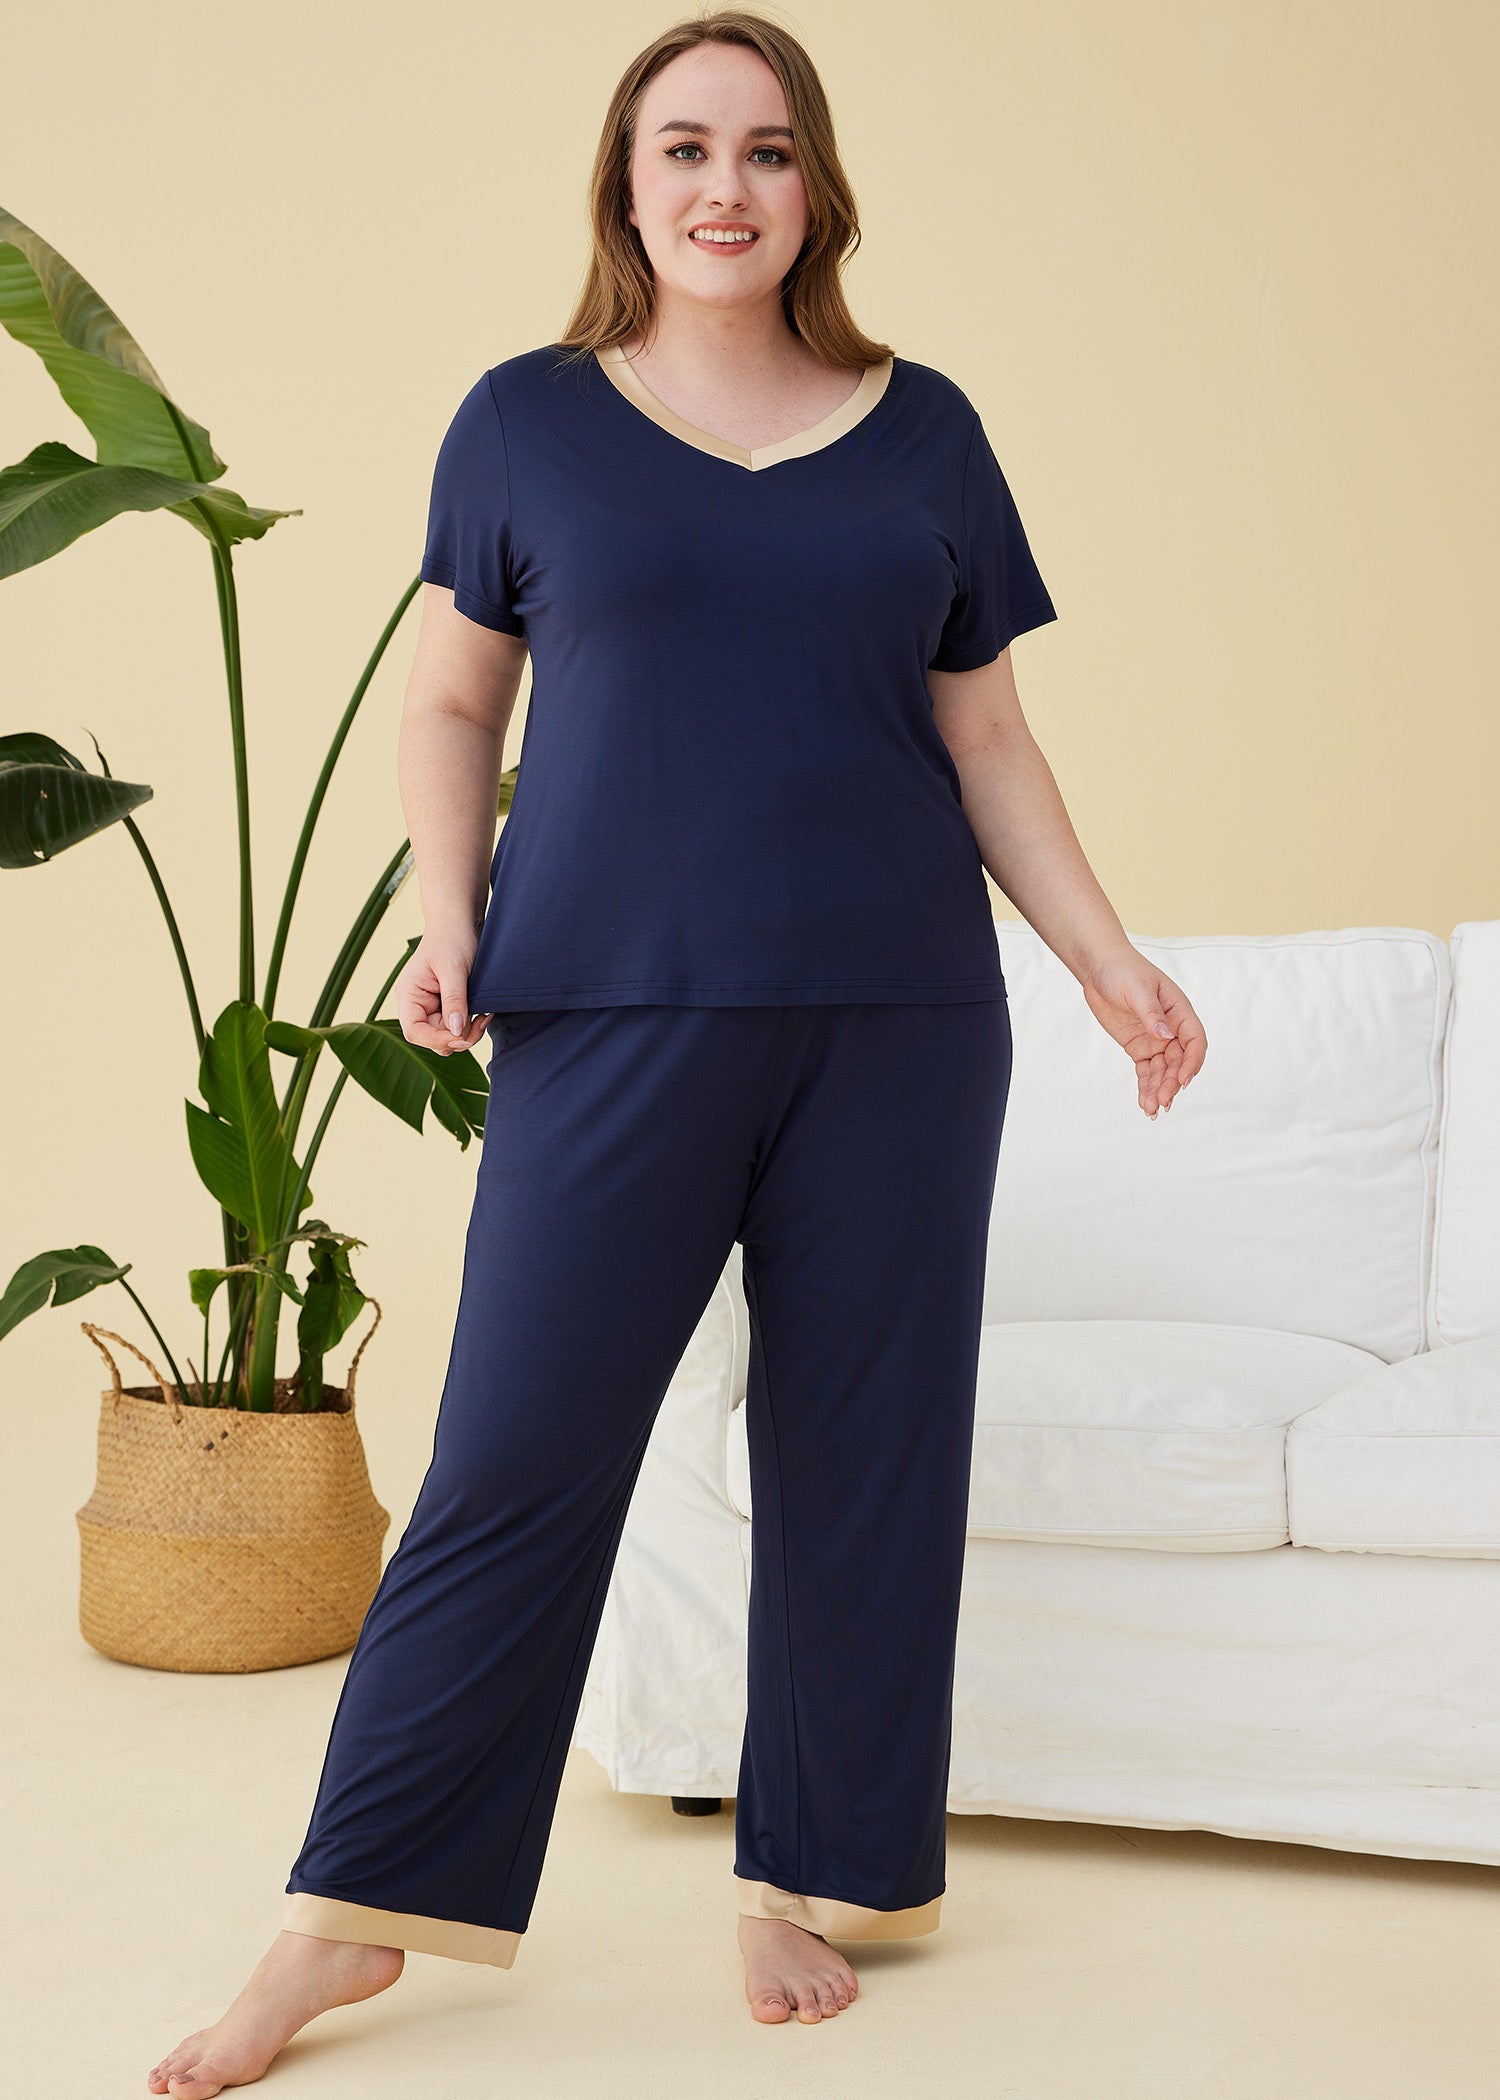 Latuza Womens Grey Pajama Pants Size Small - beyond exchange